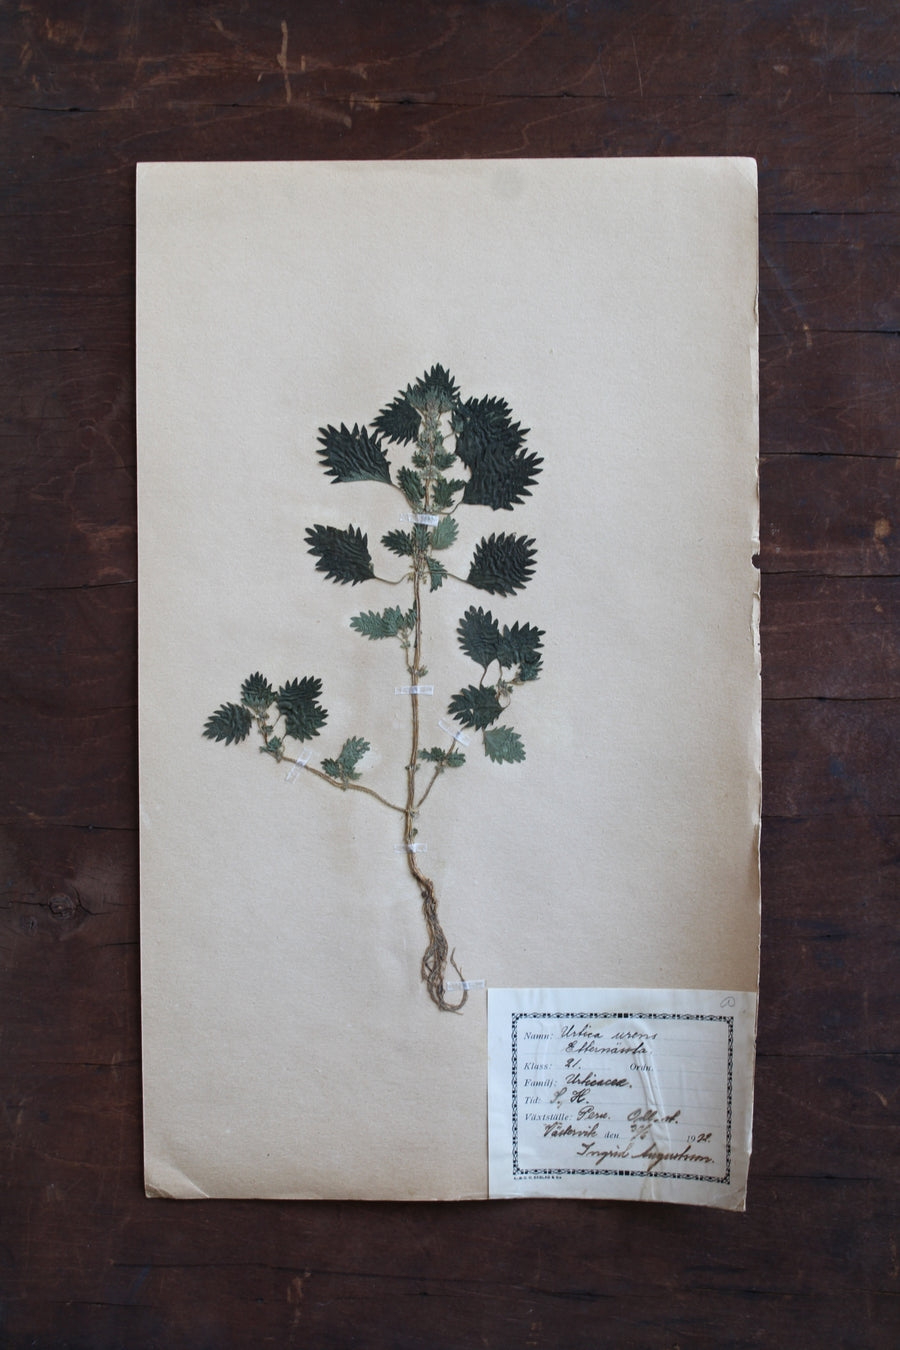 1930s Swedish Herbarium Specimen - Annual Nettle